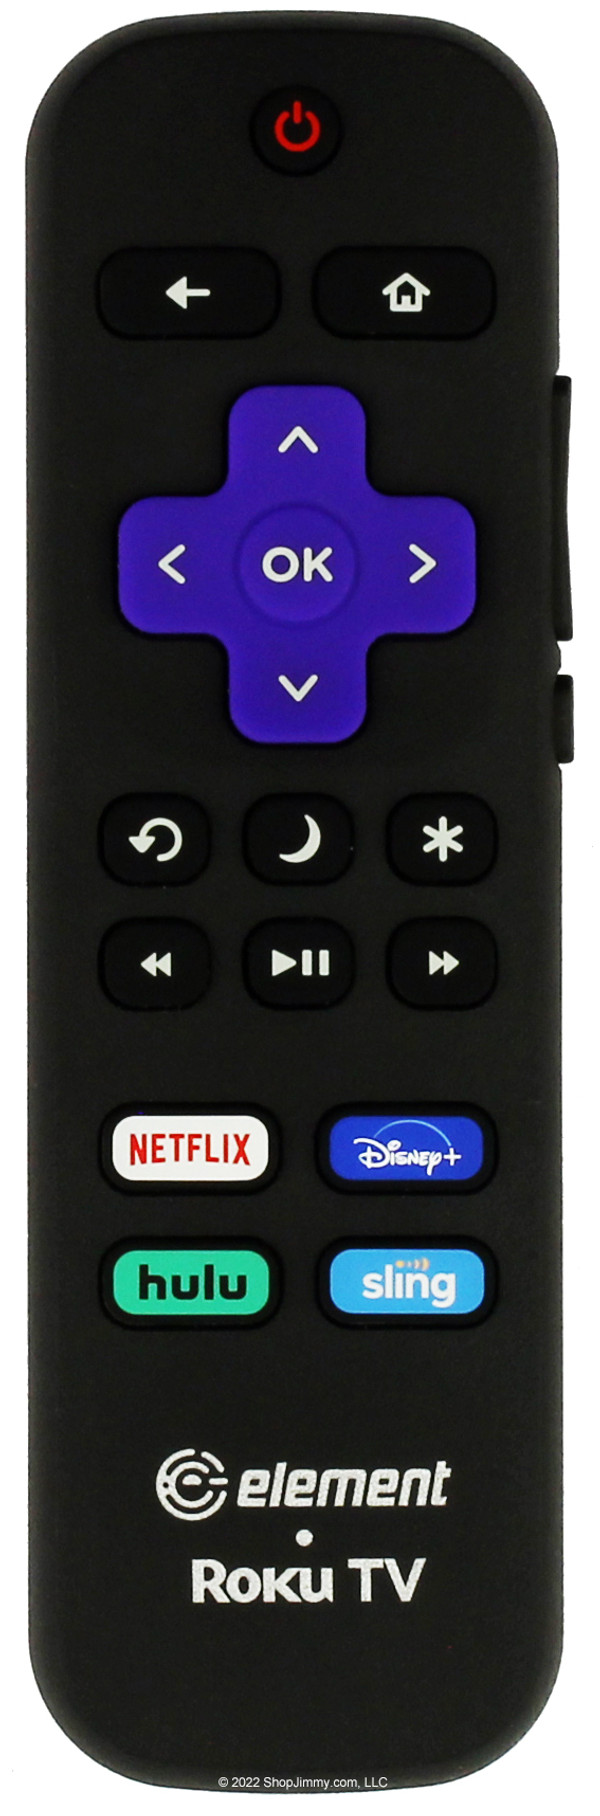 Element 3226000875 Roku TV Remote Control -- New